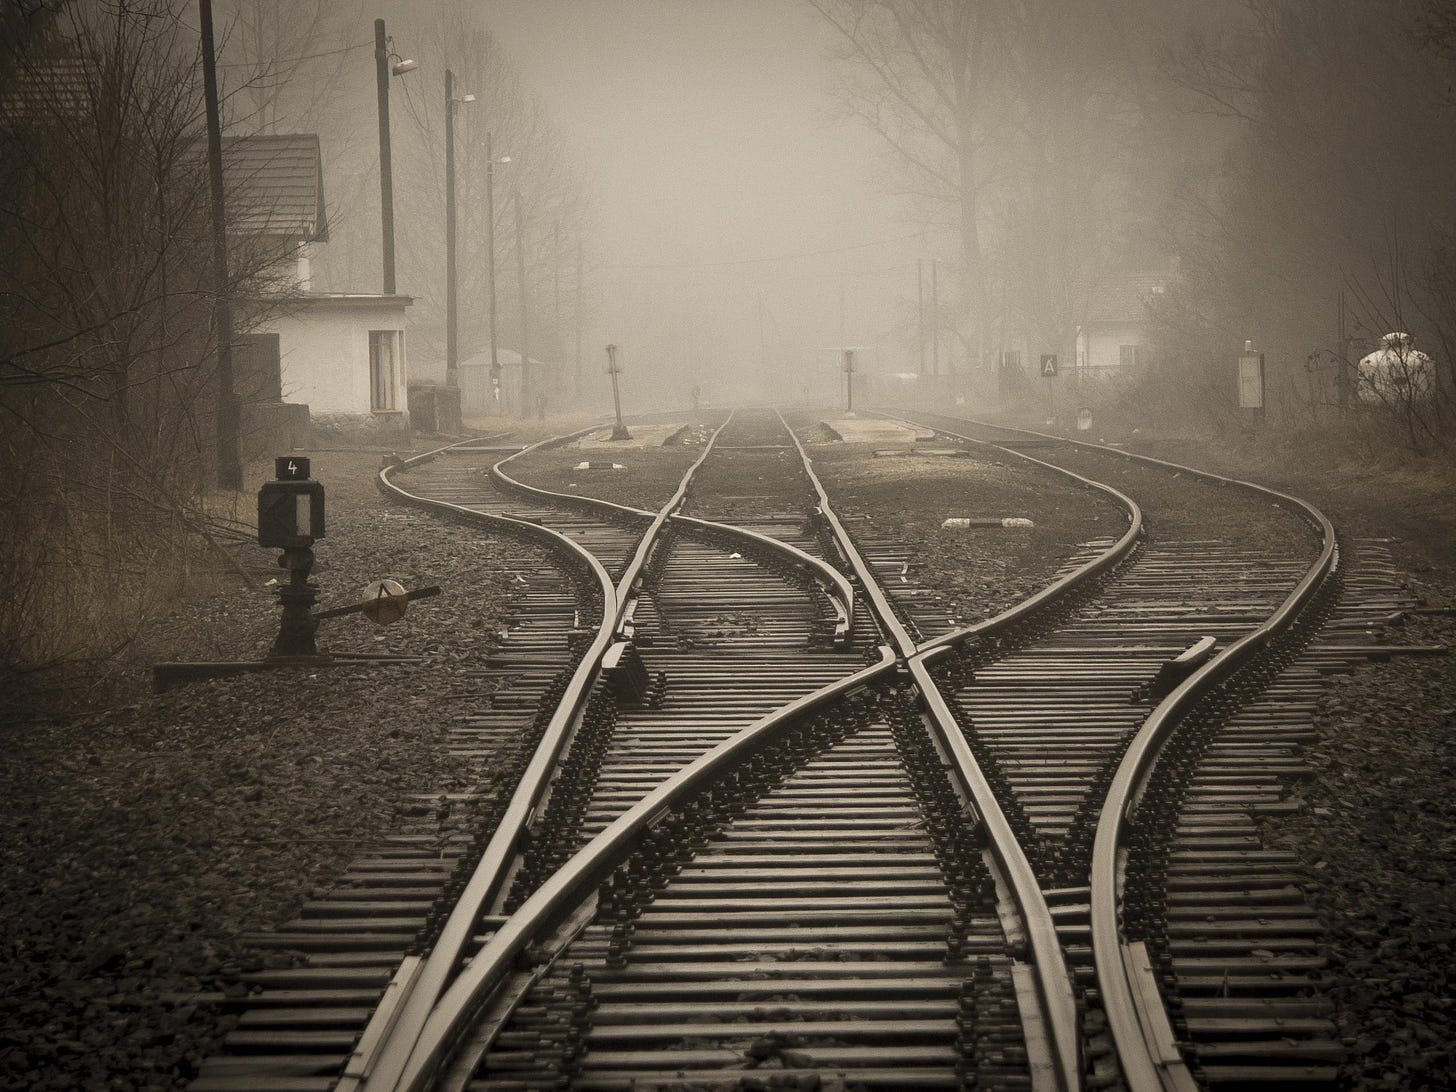 Railway tracks with fog